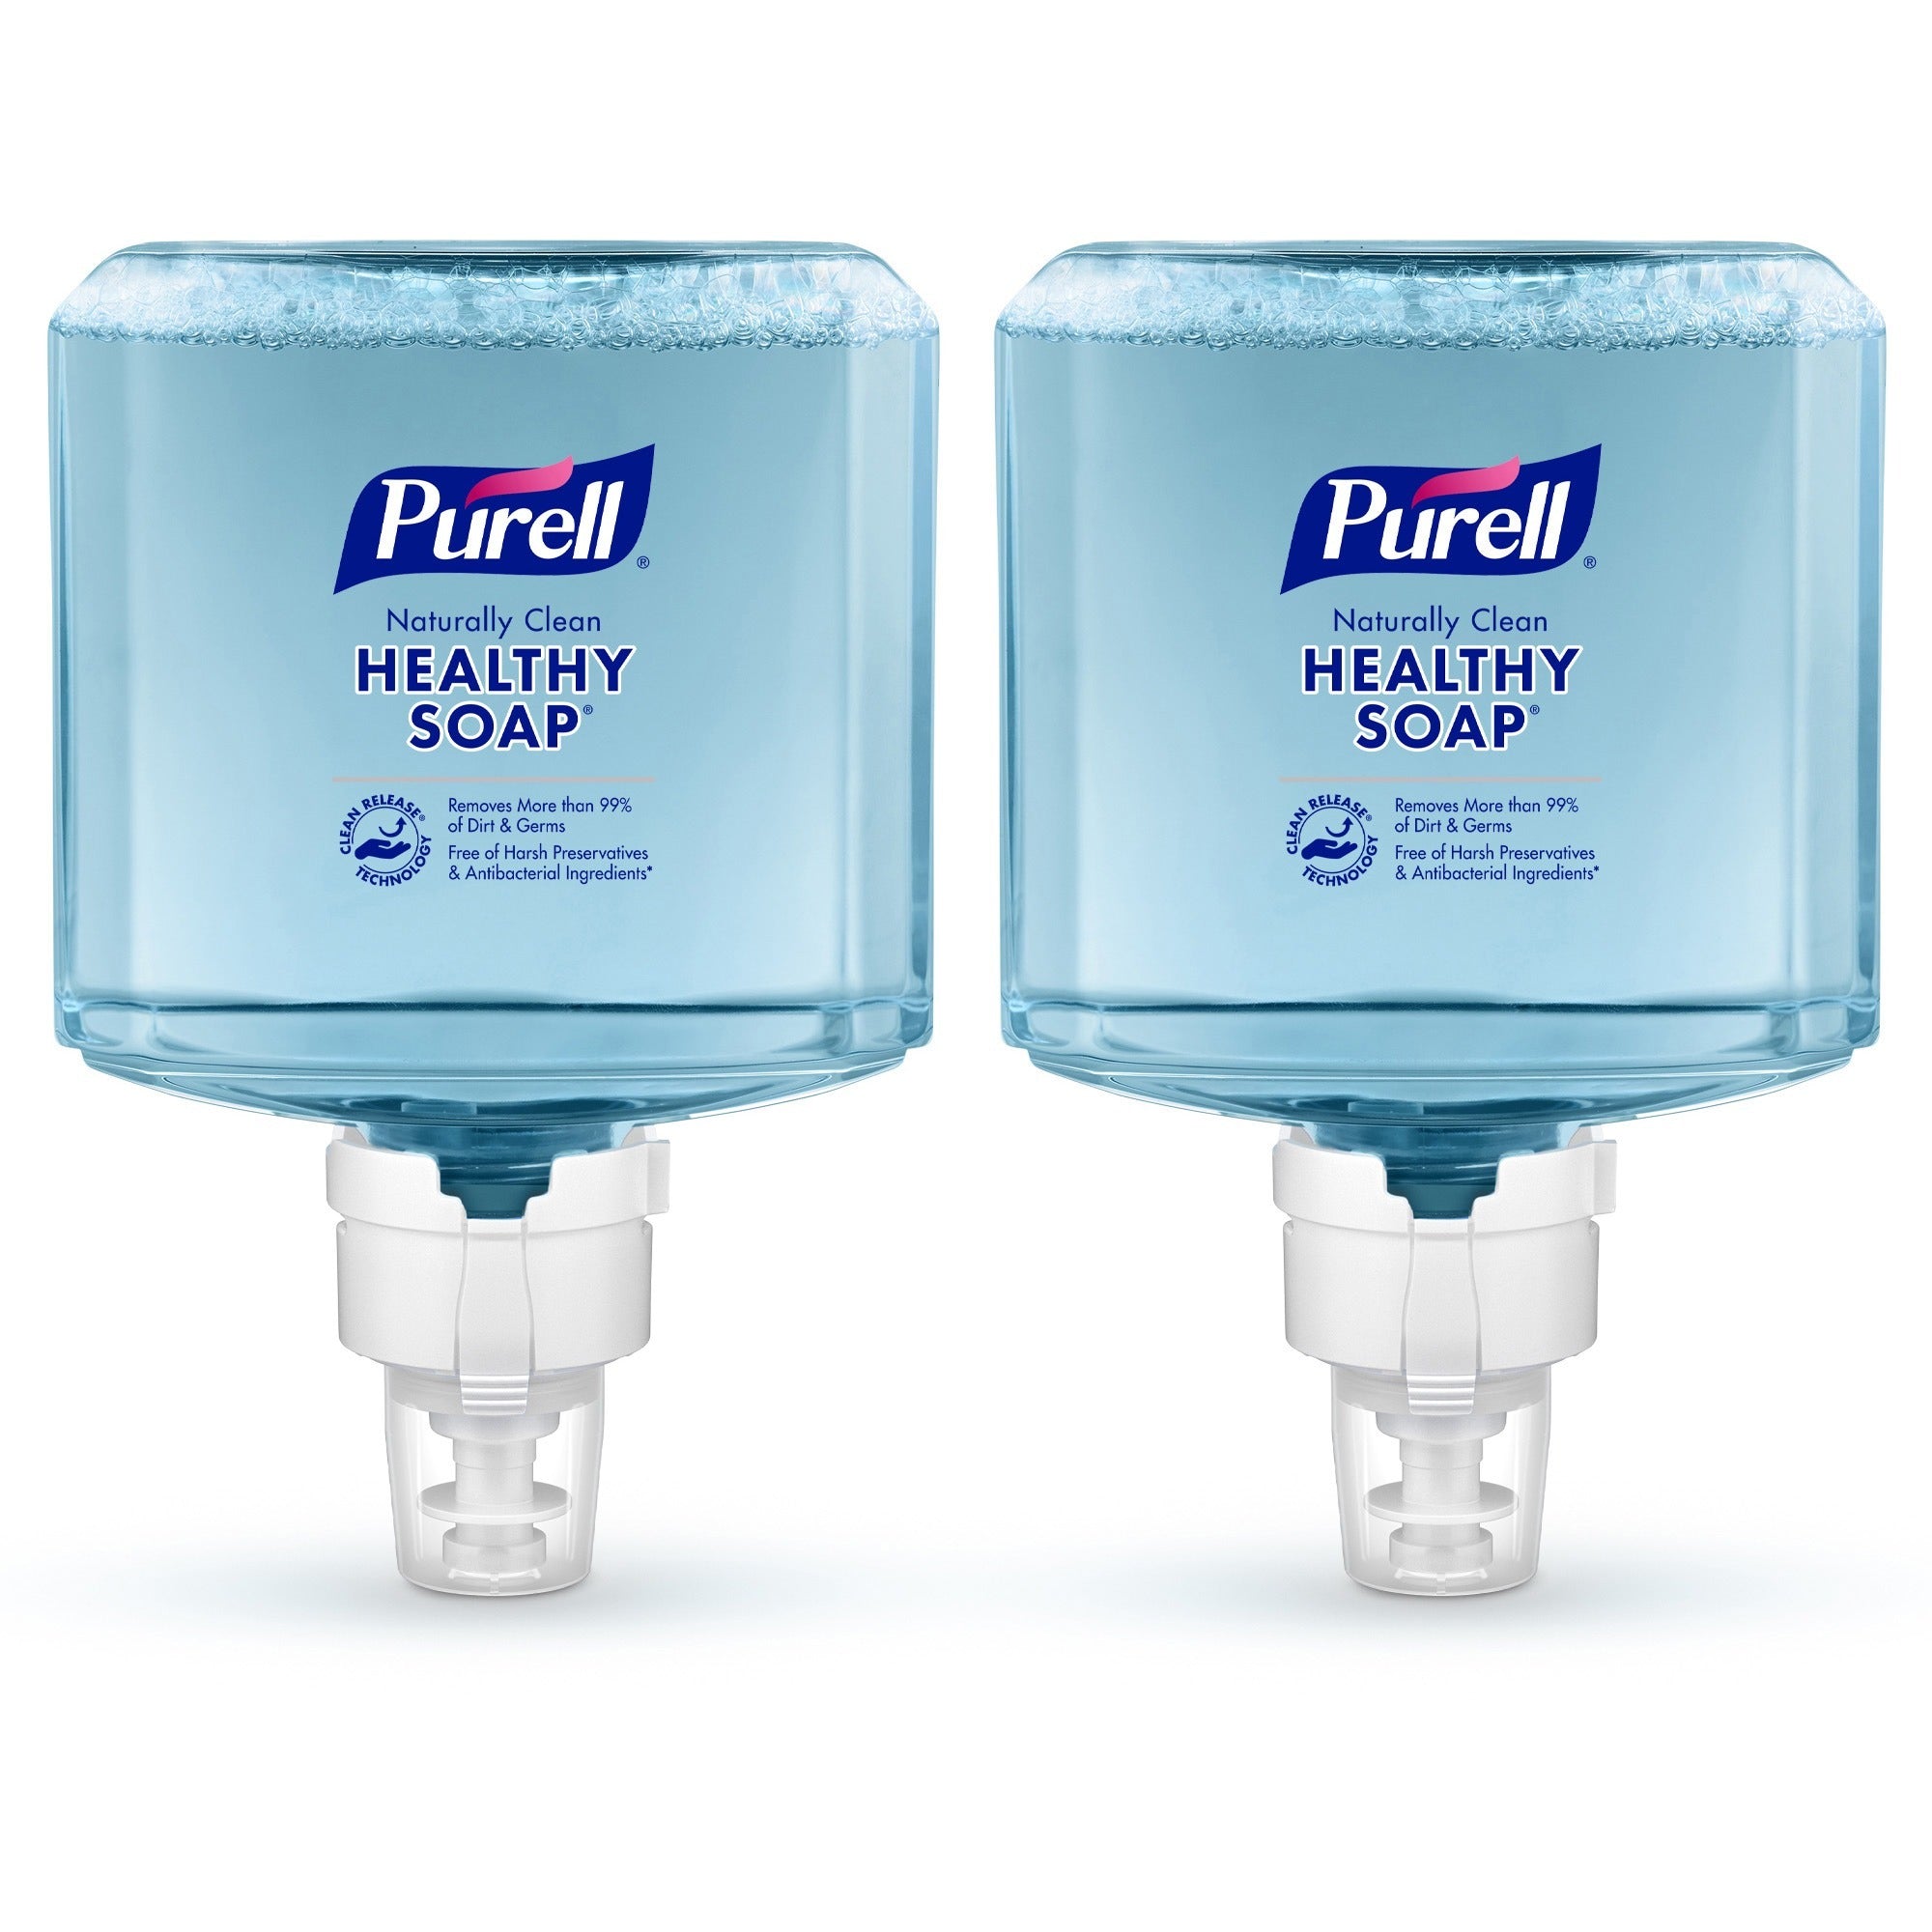 purell-es8-crt-healthy-soap-naturally-clean-foam-406-fl-oz-1200-ml-dirt-remover-kill-germs-skin-blue-preservative-free-paraben-free-phthalate-free-dye-free-bio-based-2-carton_goj777102 - 1